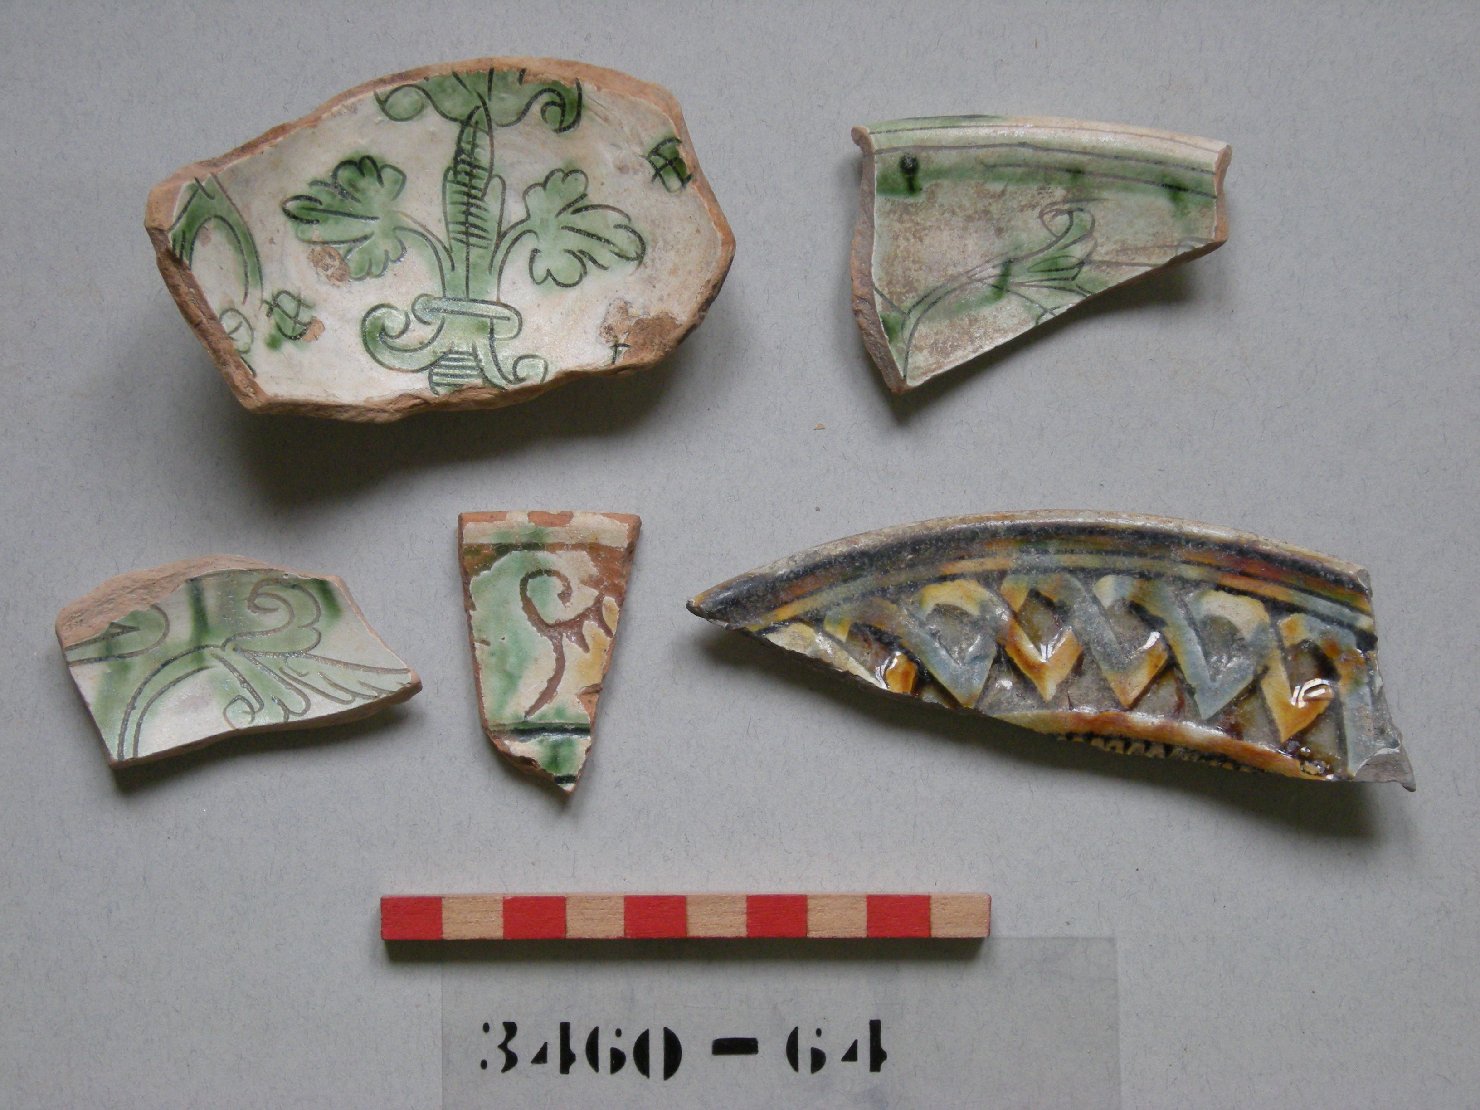 motivi decorativi vegetali (piatto, frammento) - ambito veneziano (secc. XV/ XVI)